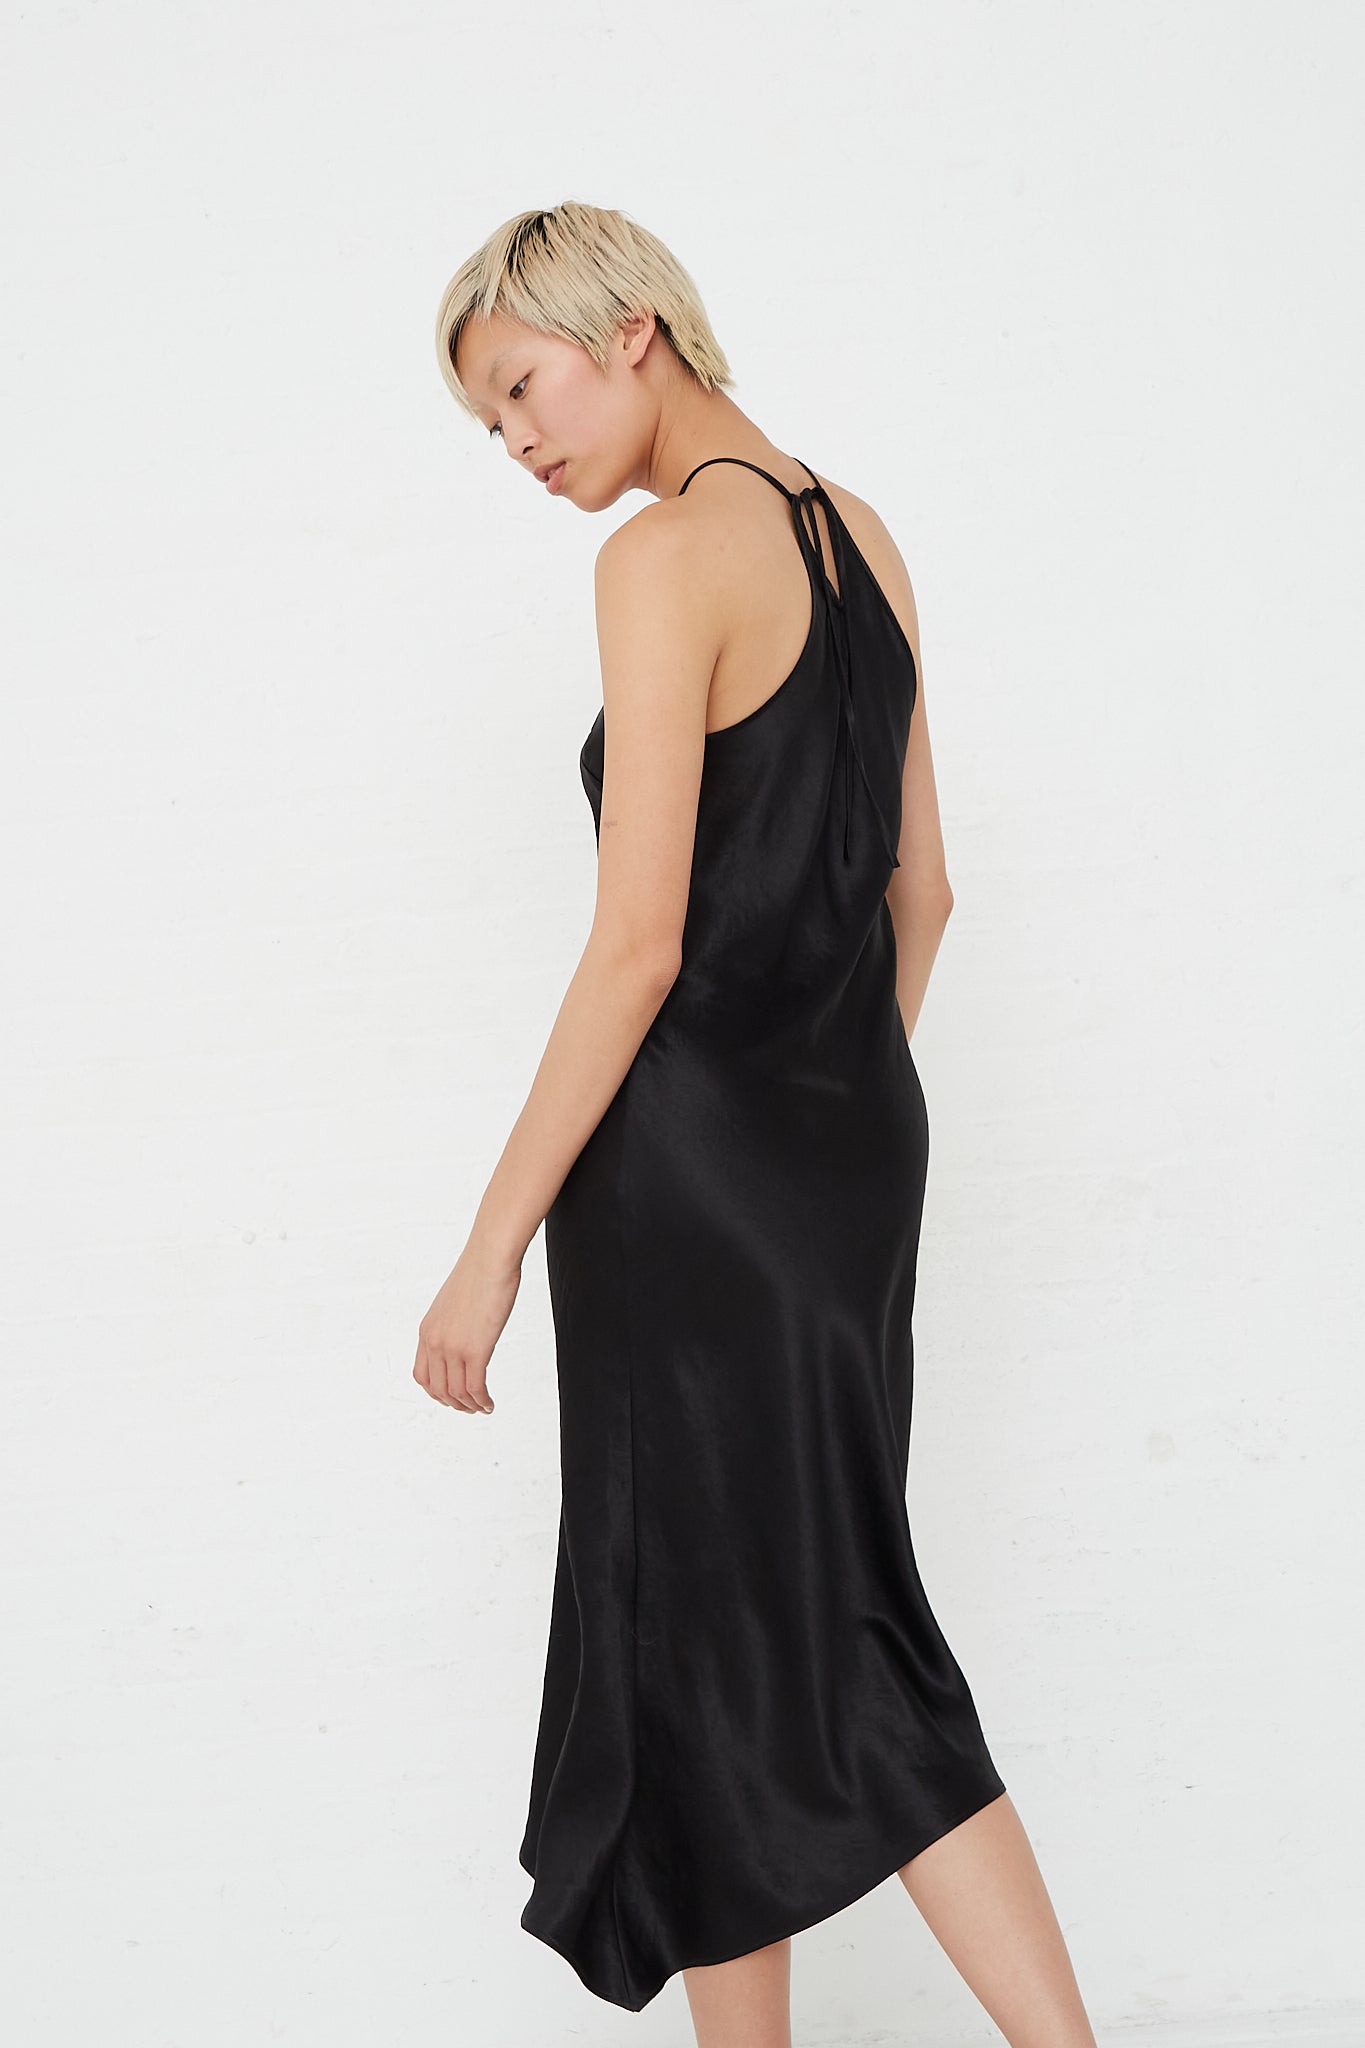 Nomia - Halter Bias Dress in Black side view